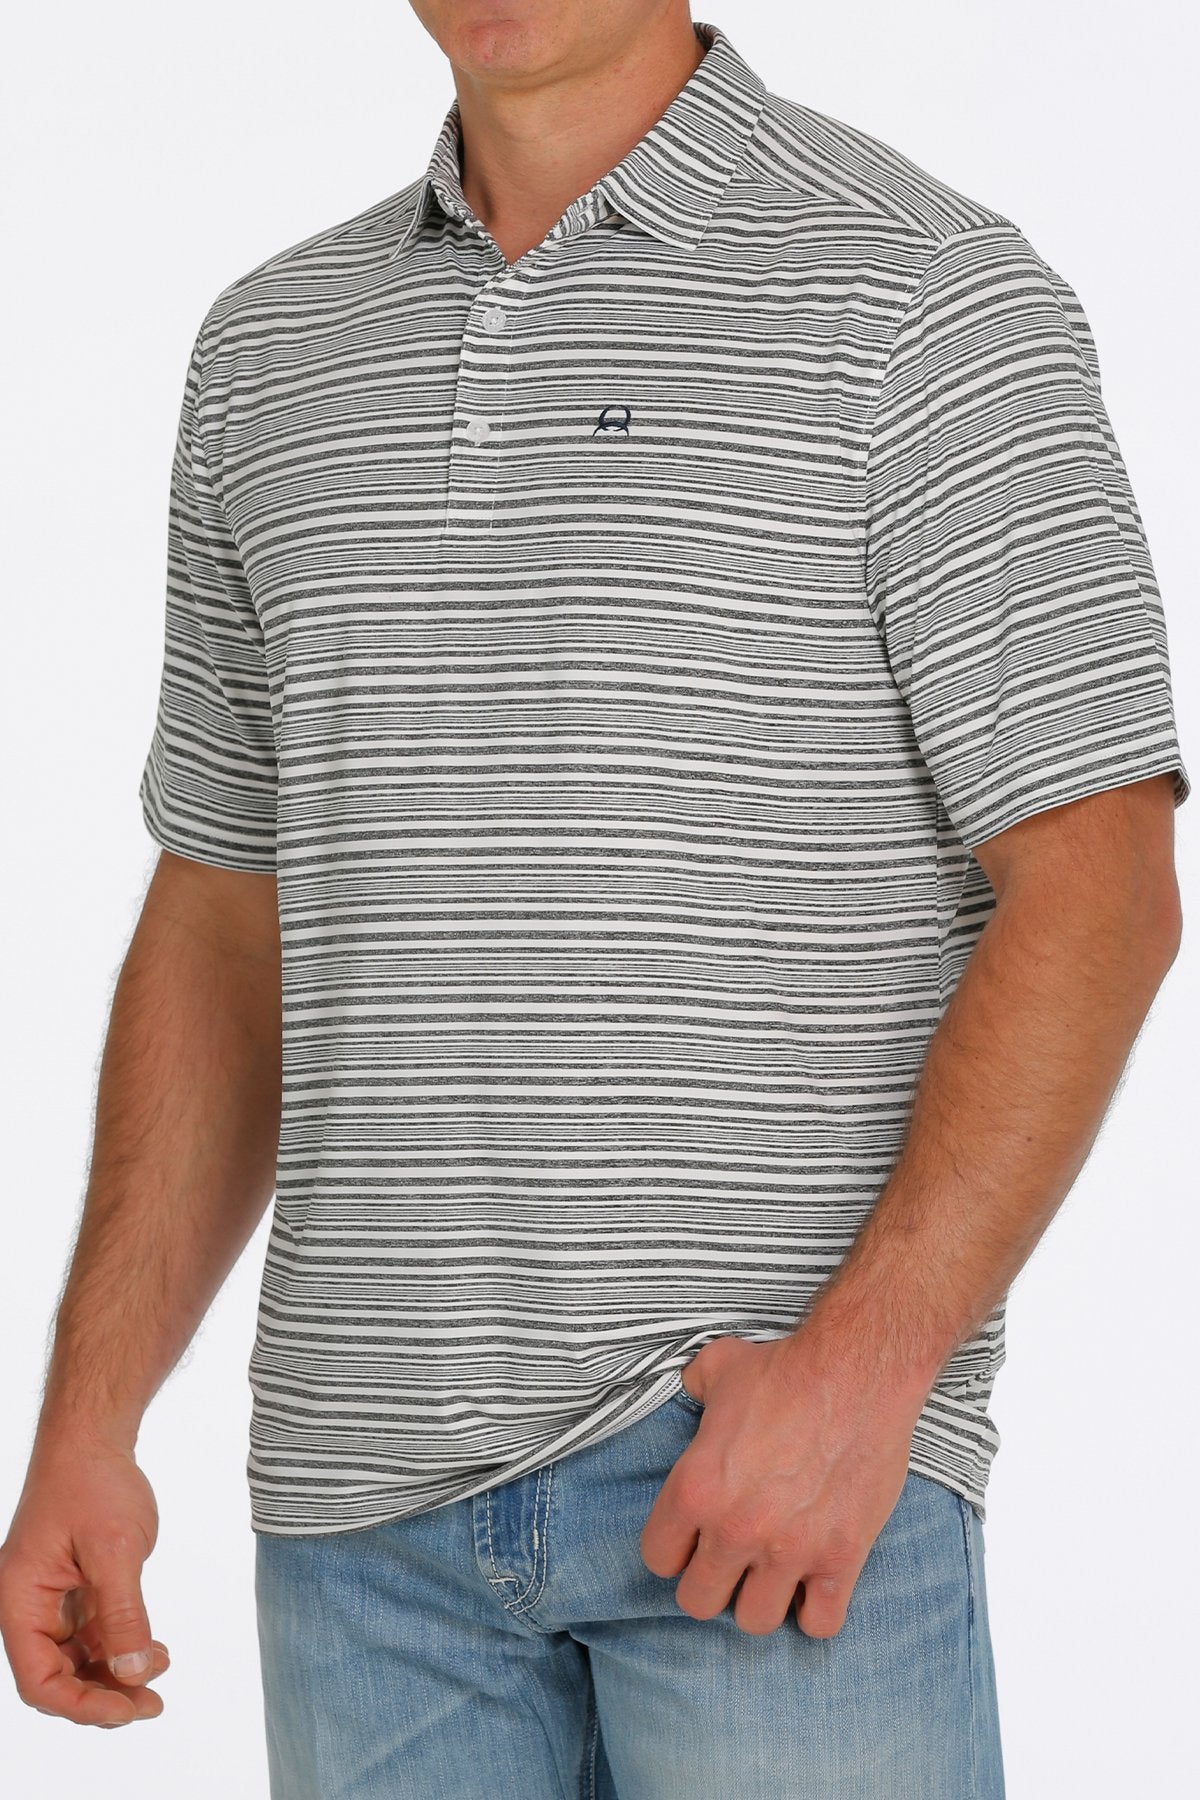 Cinch Grey/White Strip Arena Flex Polo Short Sleeve